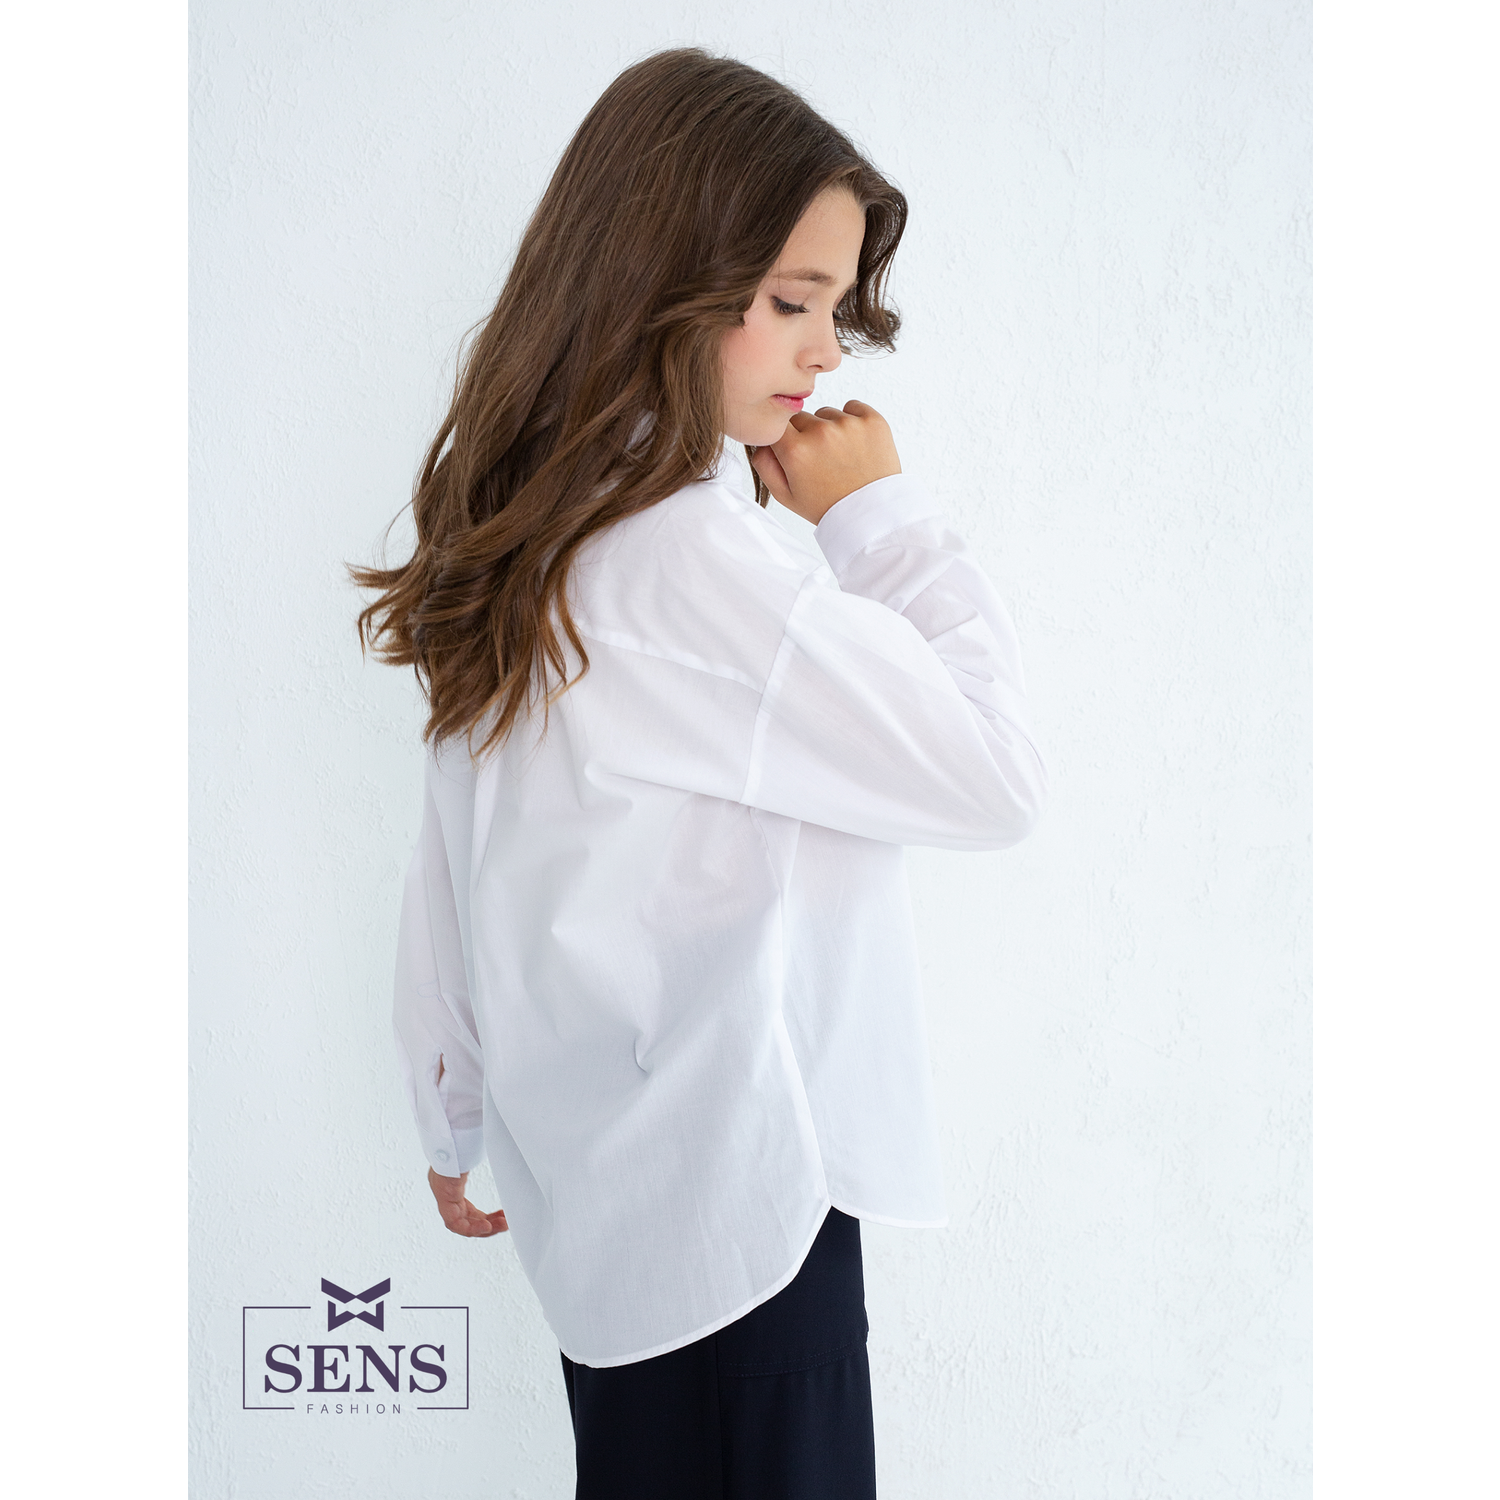 Рубашка Sens Fashion РДО/белый - фото 9